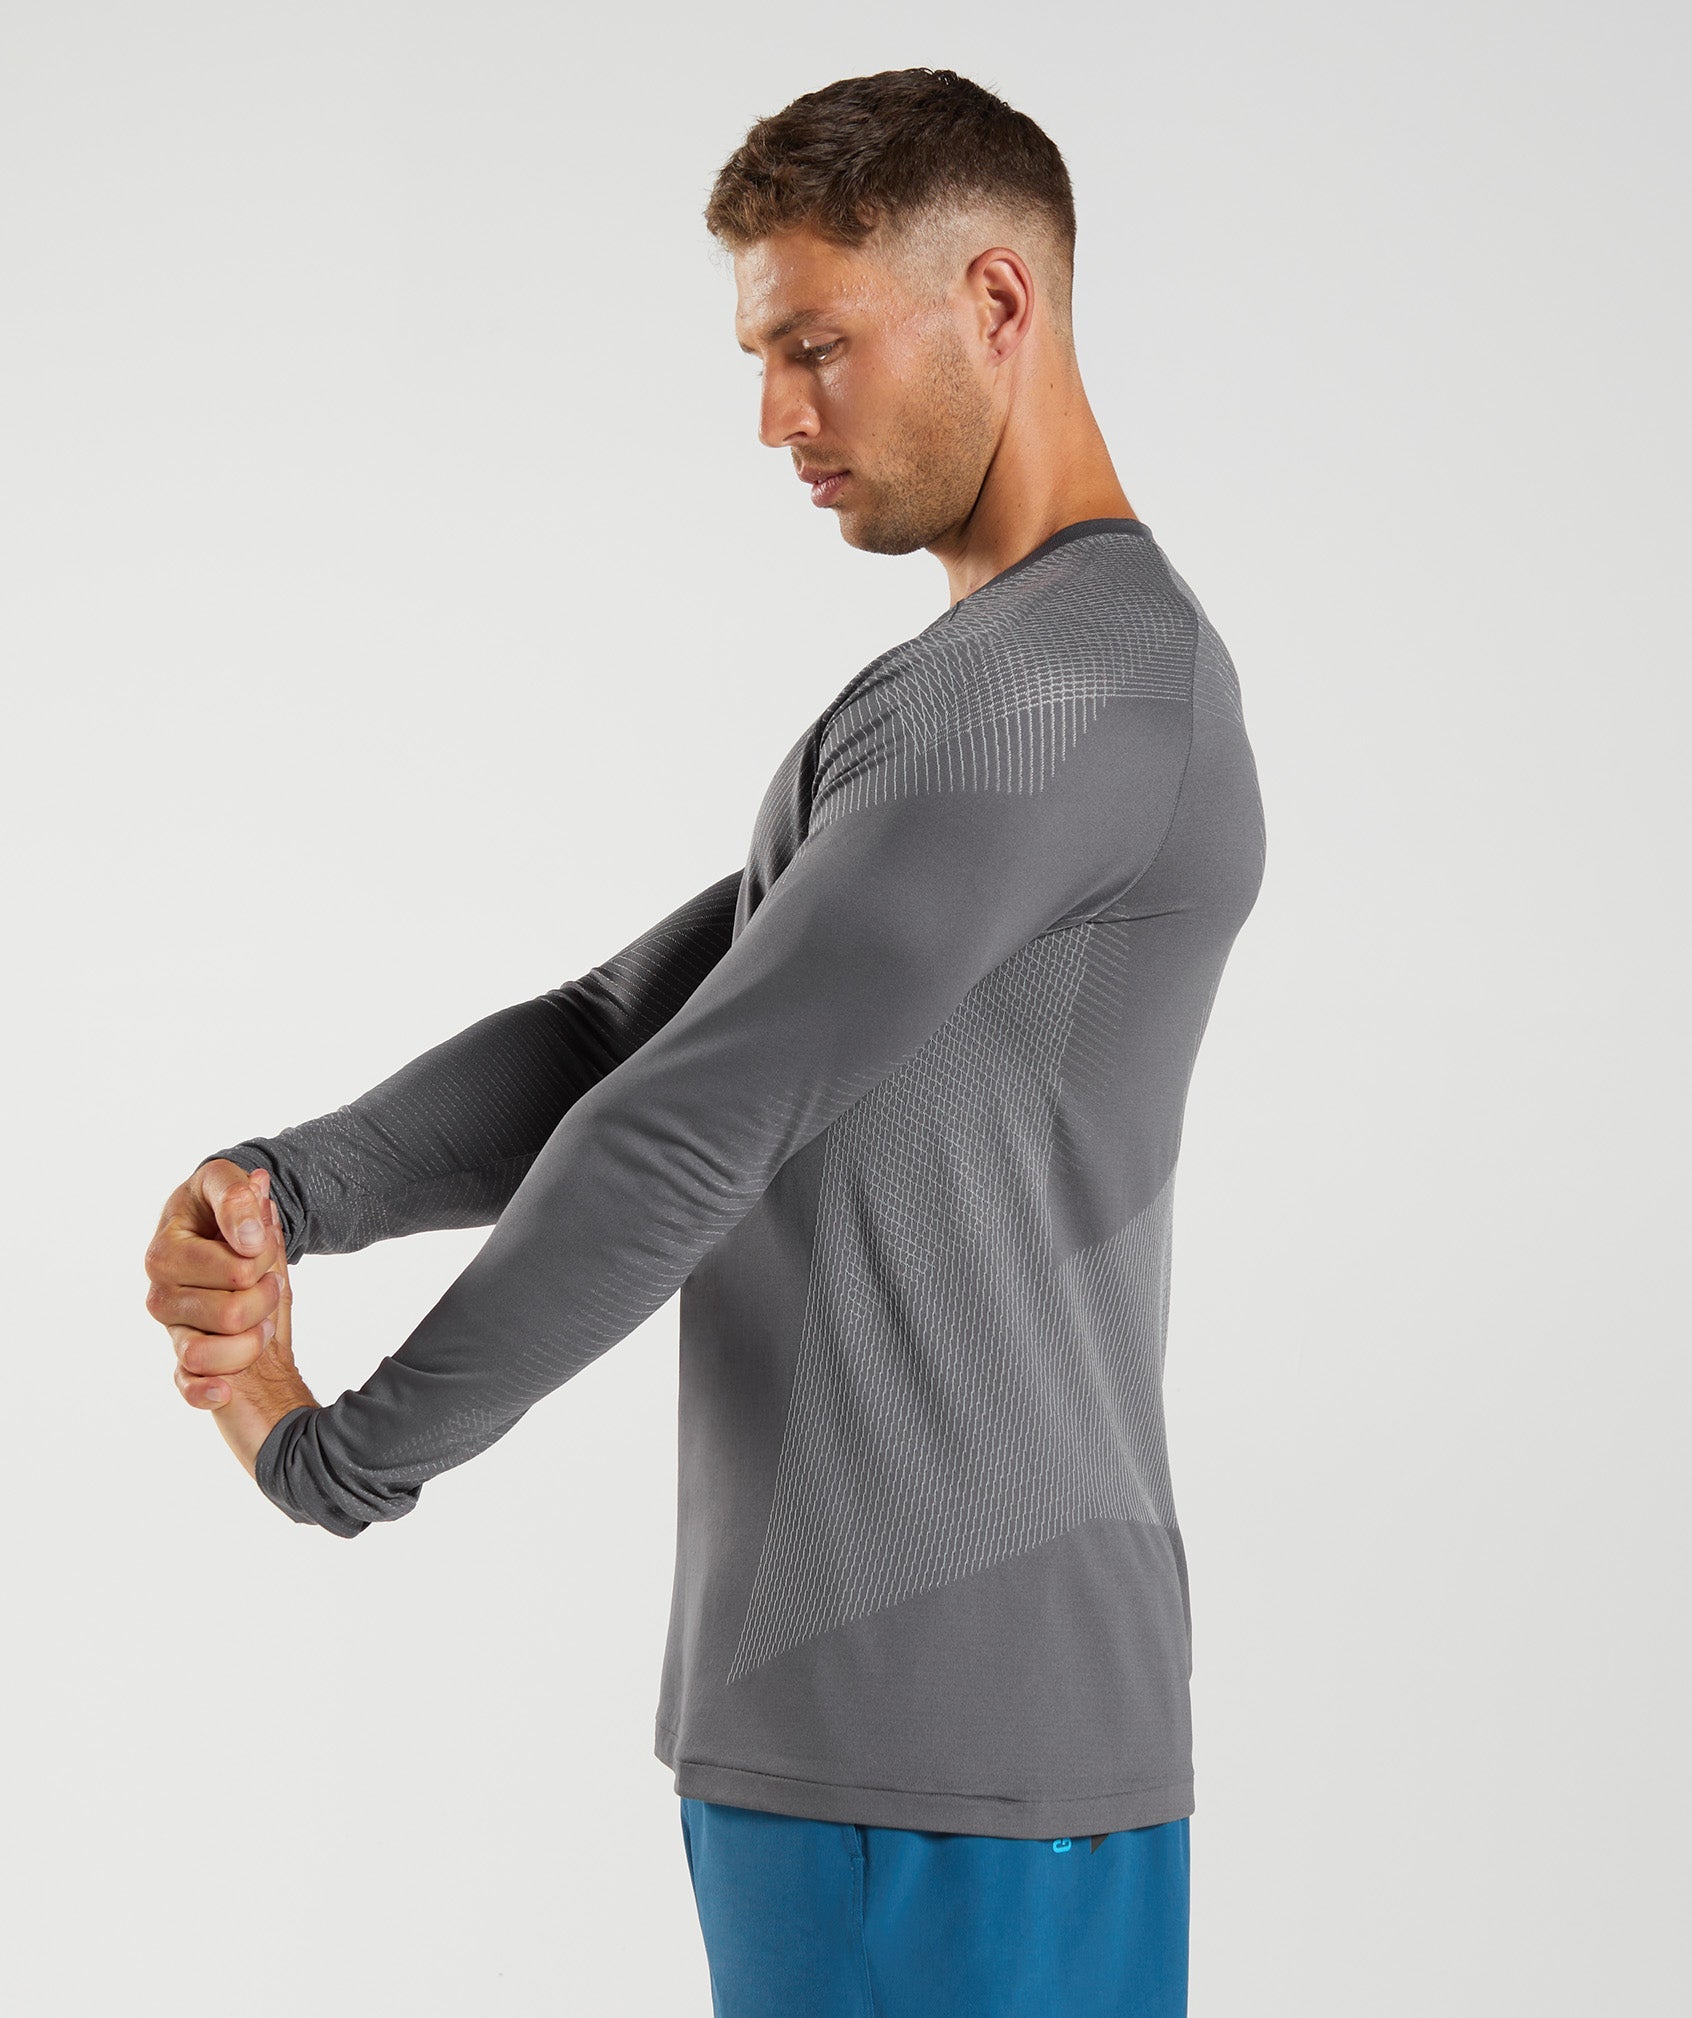 Apex Seamless Long Sleeve T-Shirt in Silhouette Grey/Smokey Grey